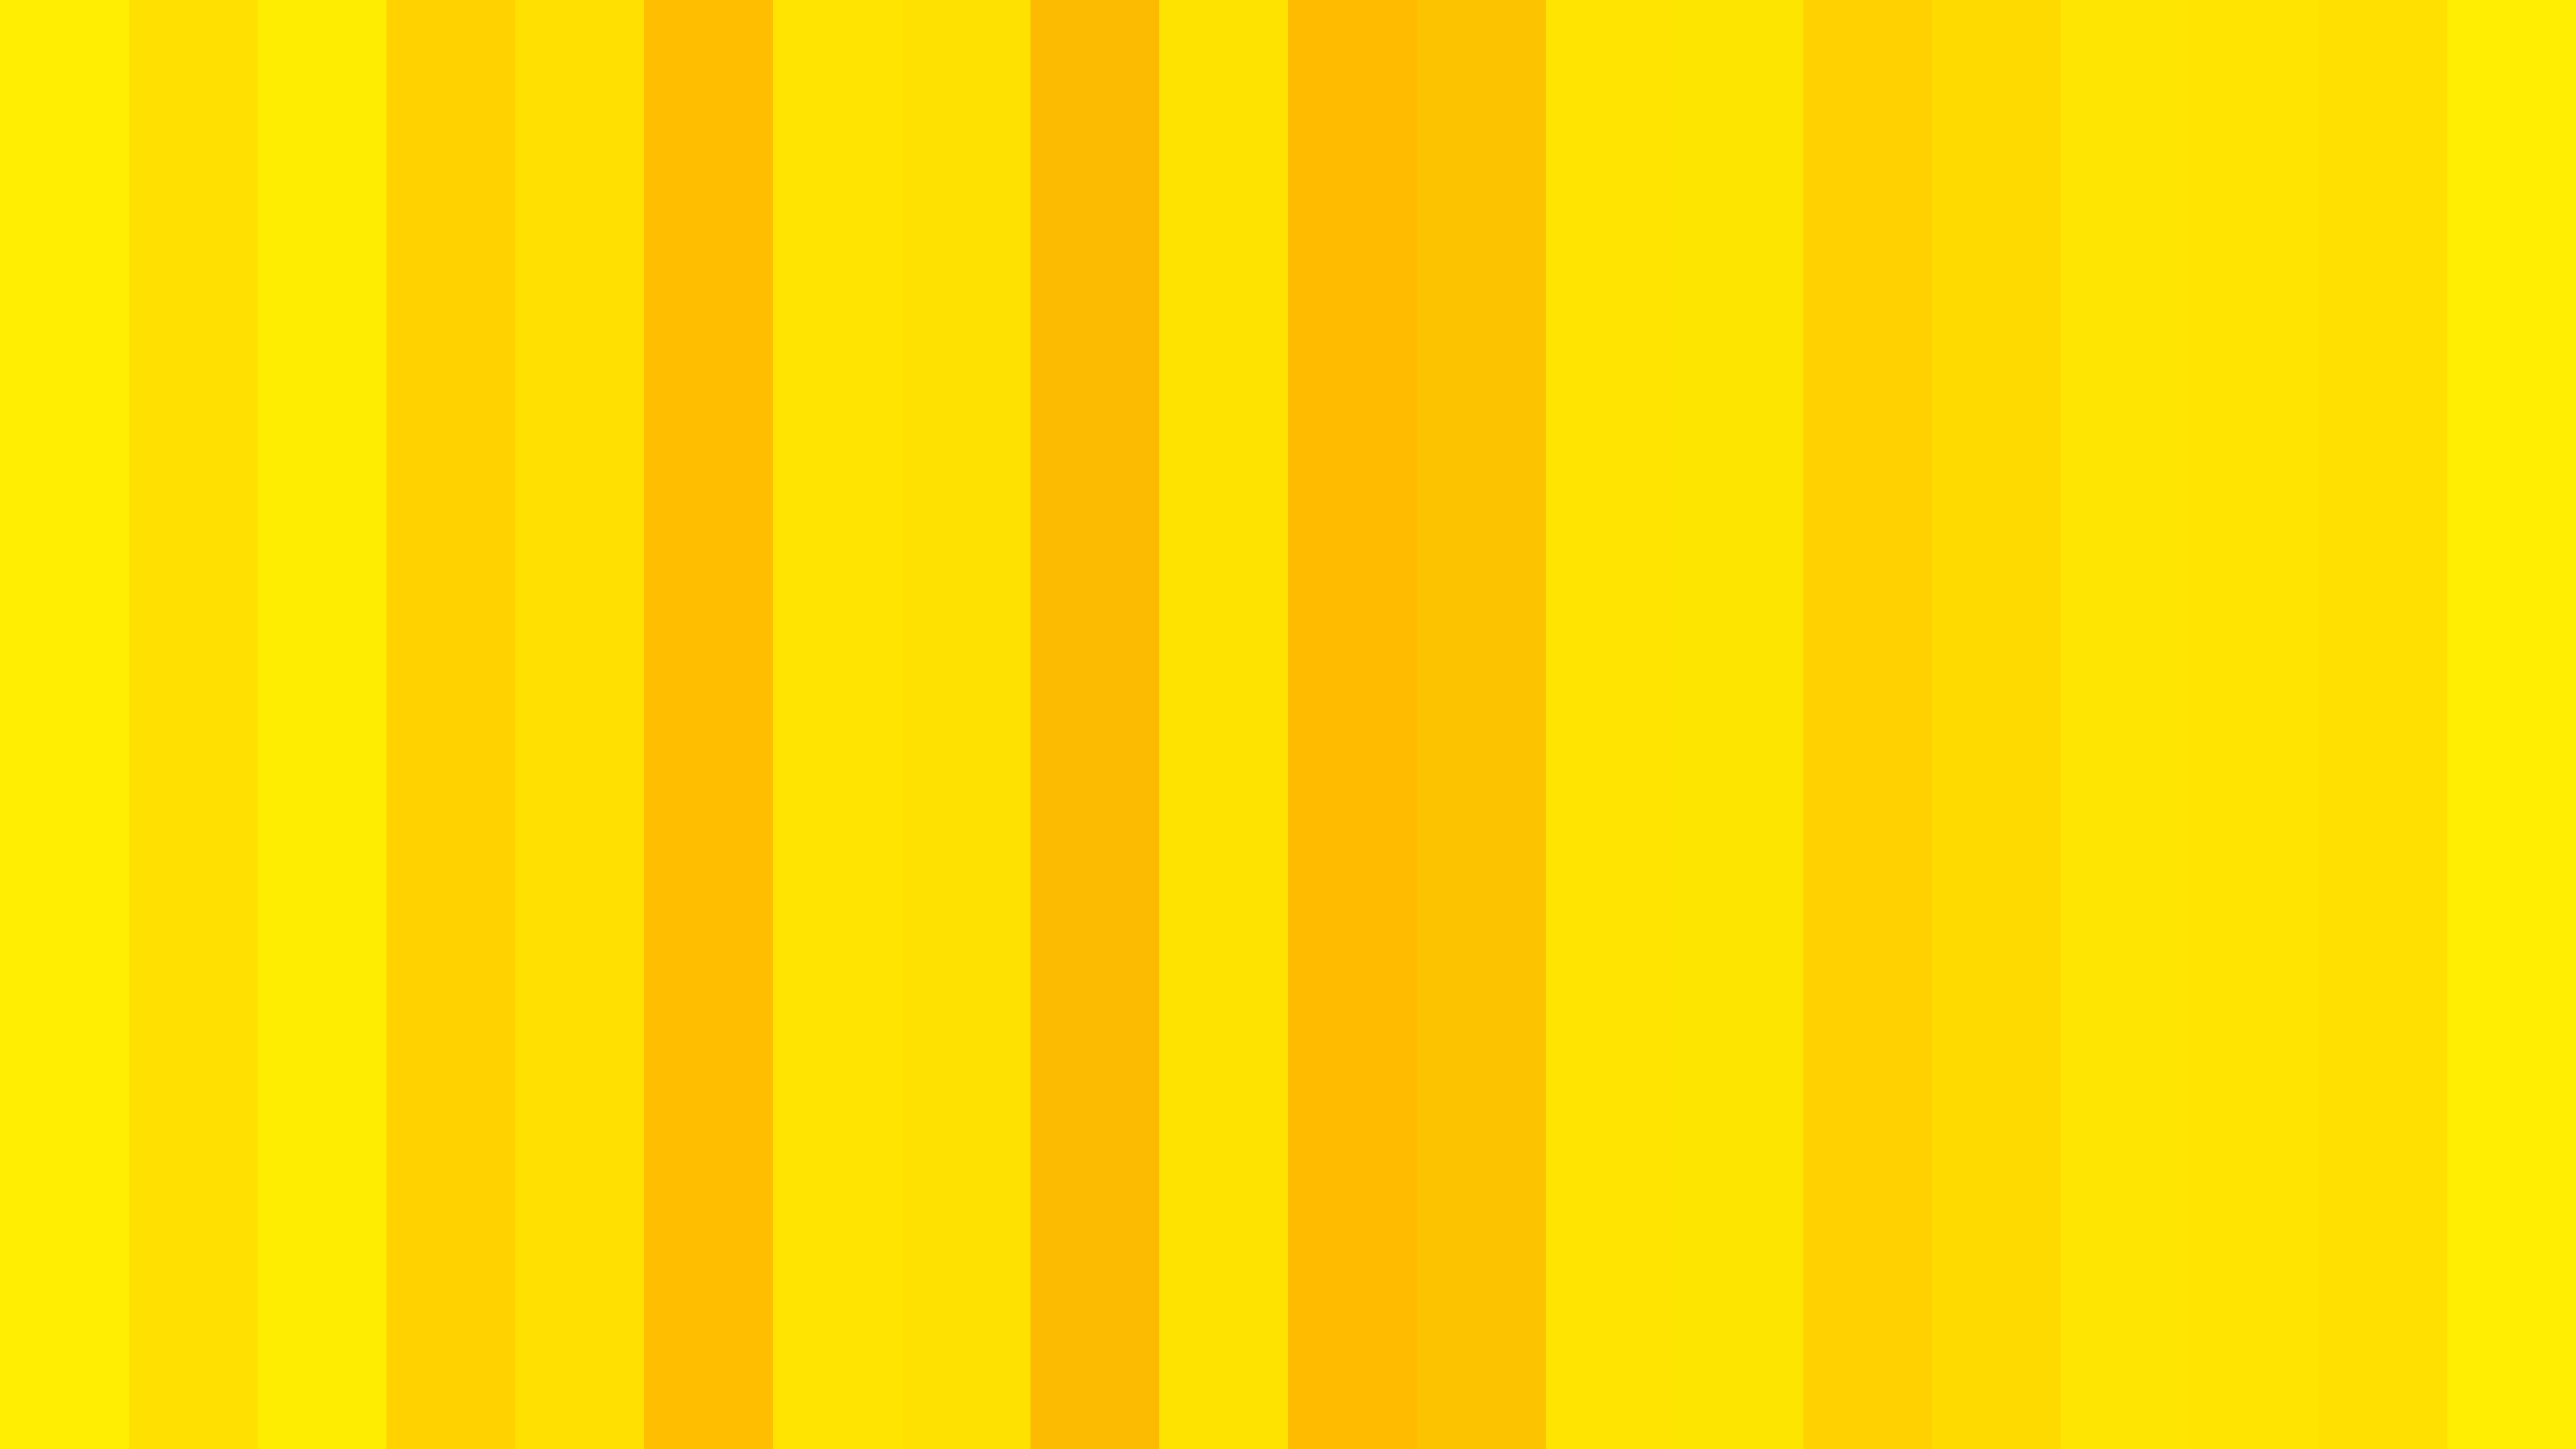 Free Orange and Yellow Striped background Image